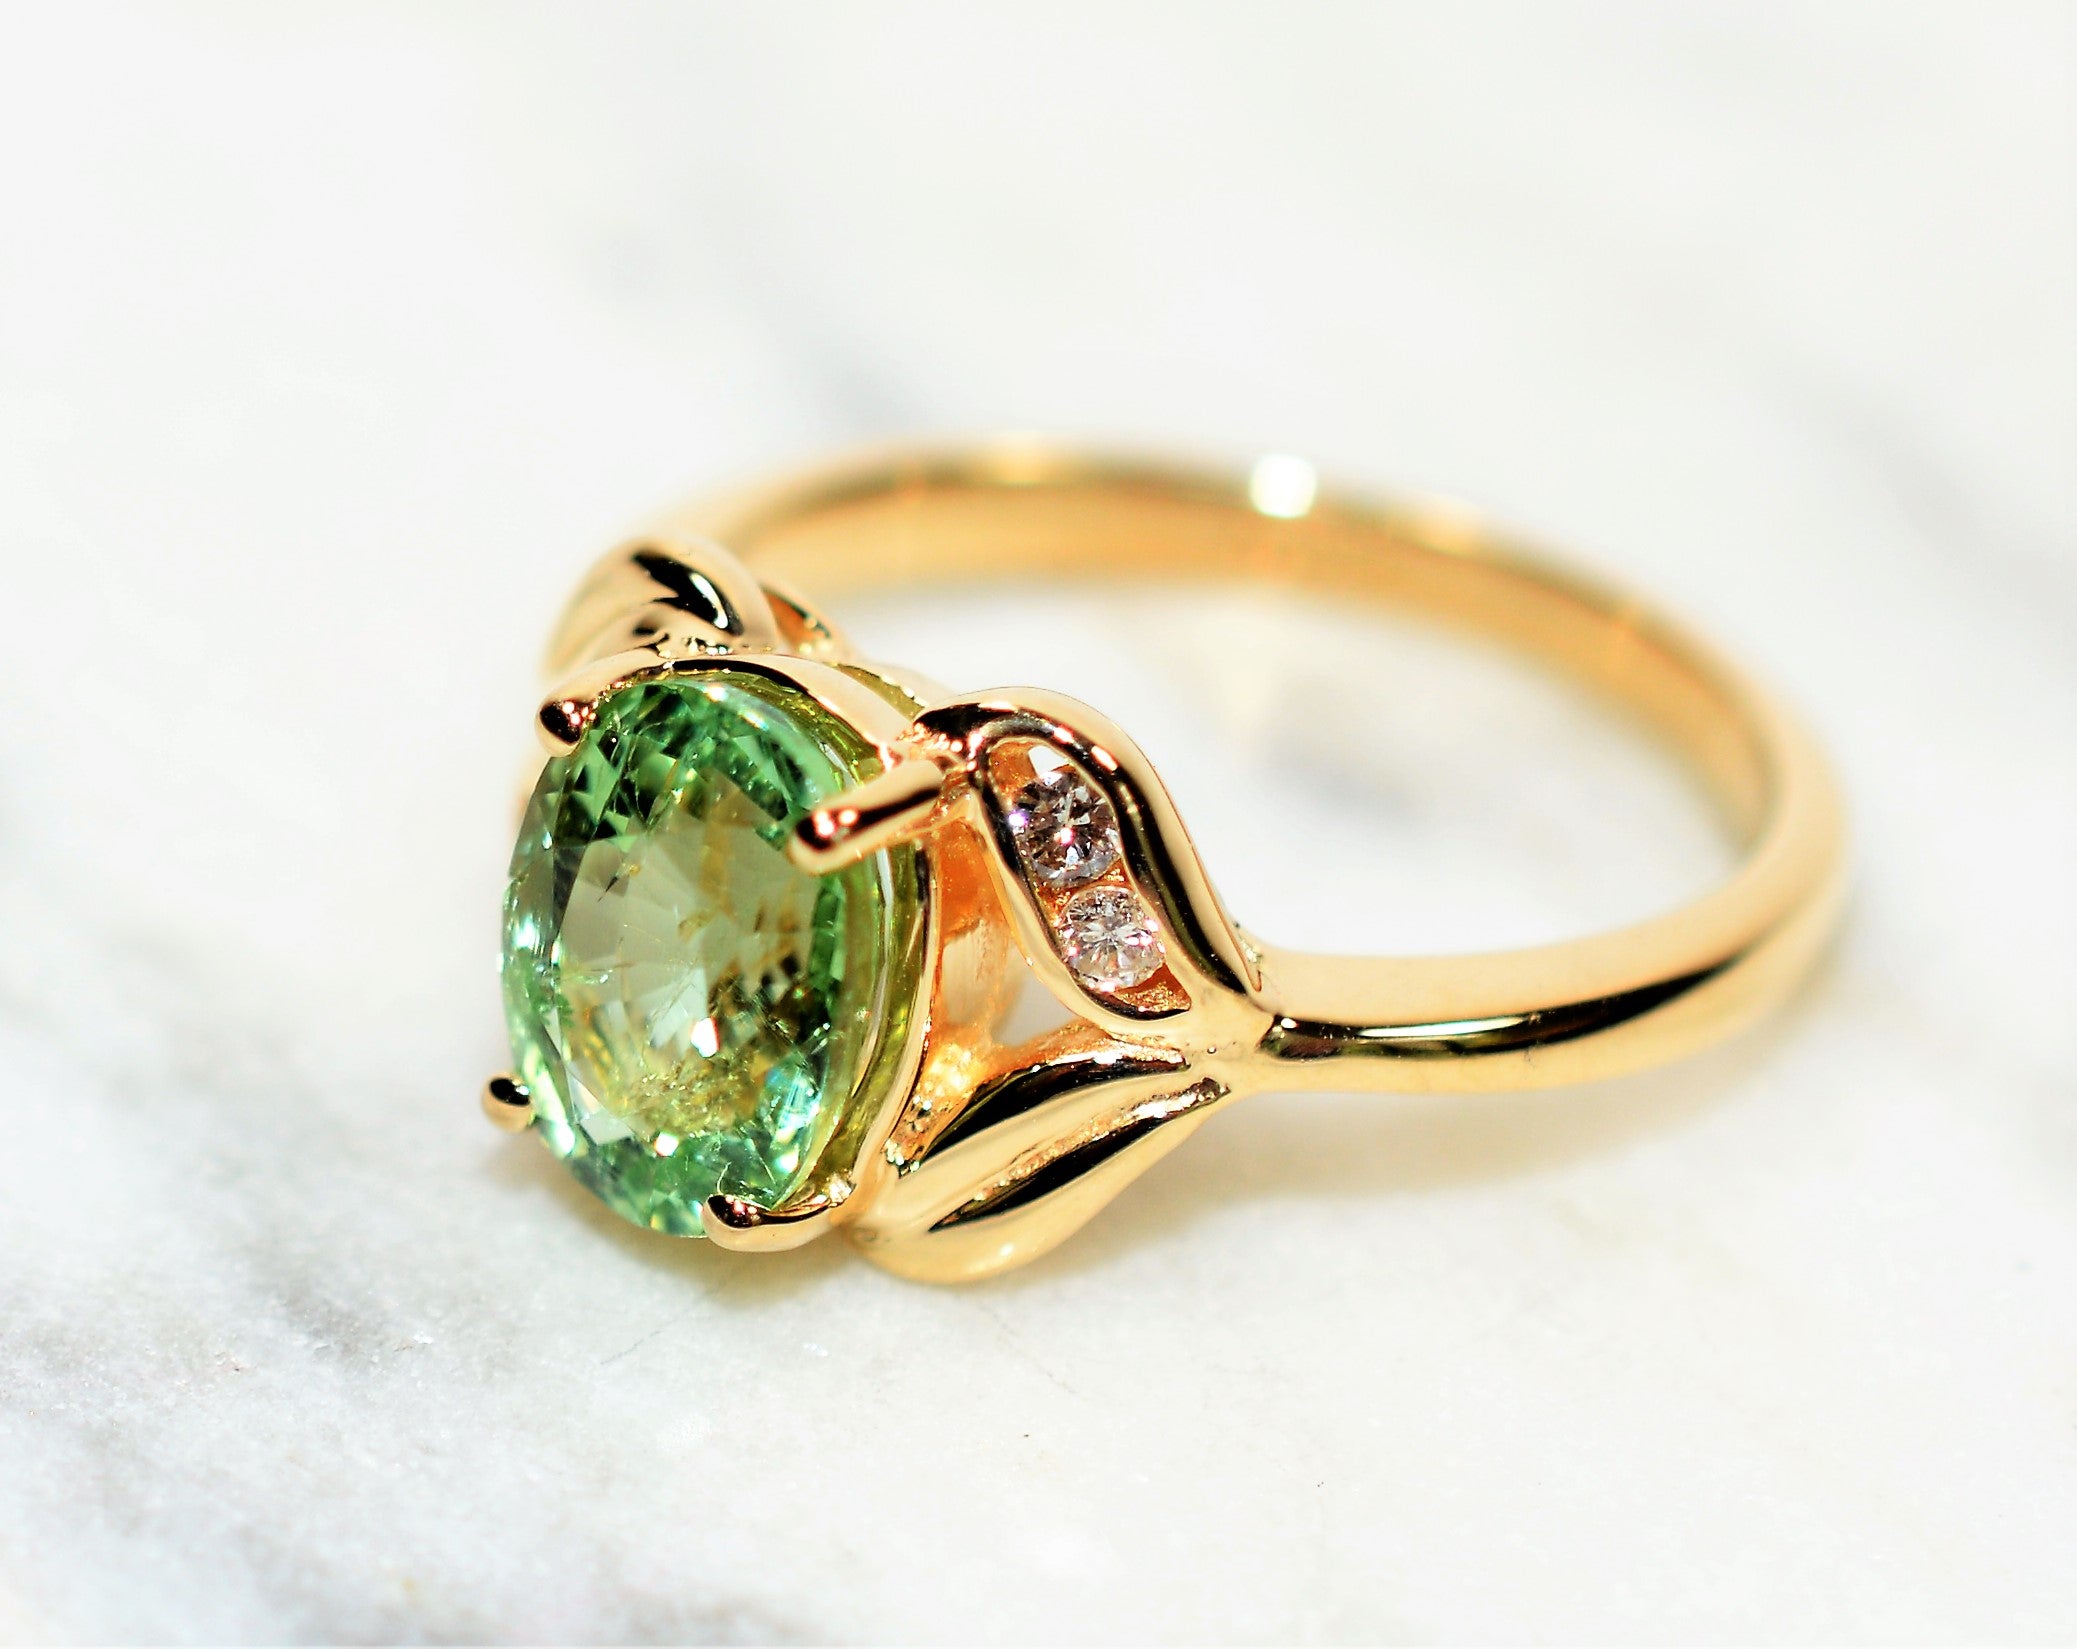 Natural Paraiba Tourmaline & Diamond Ring 10K Solid Gold 2.13tcw Women's Ring Gemstone Jewellery Birthstone Ring Statement Ring Fine Jewelry